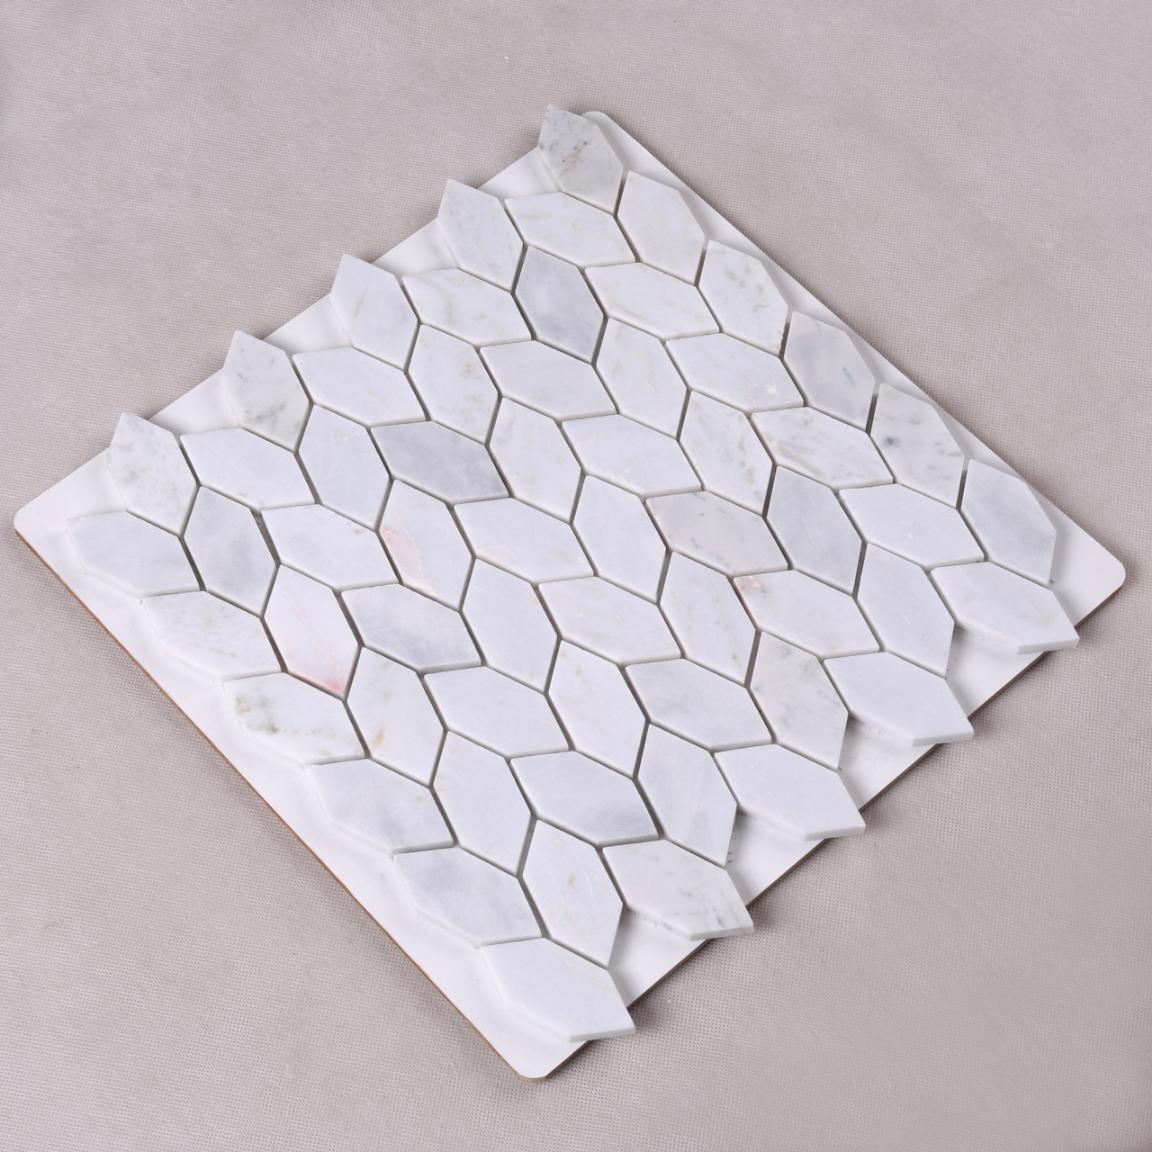 Heng Xing flower wood mosaic tile design for villa-3